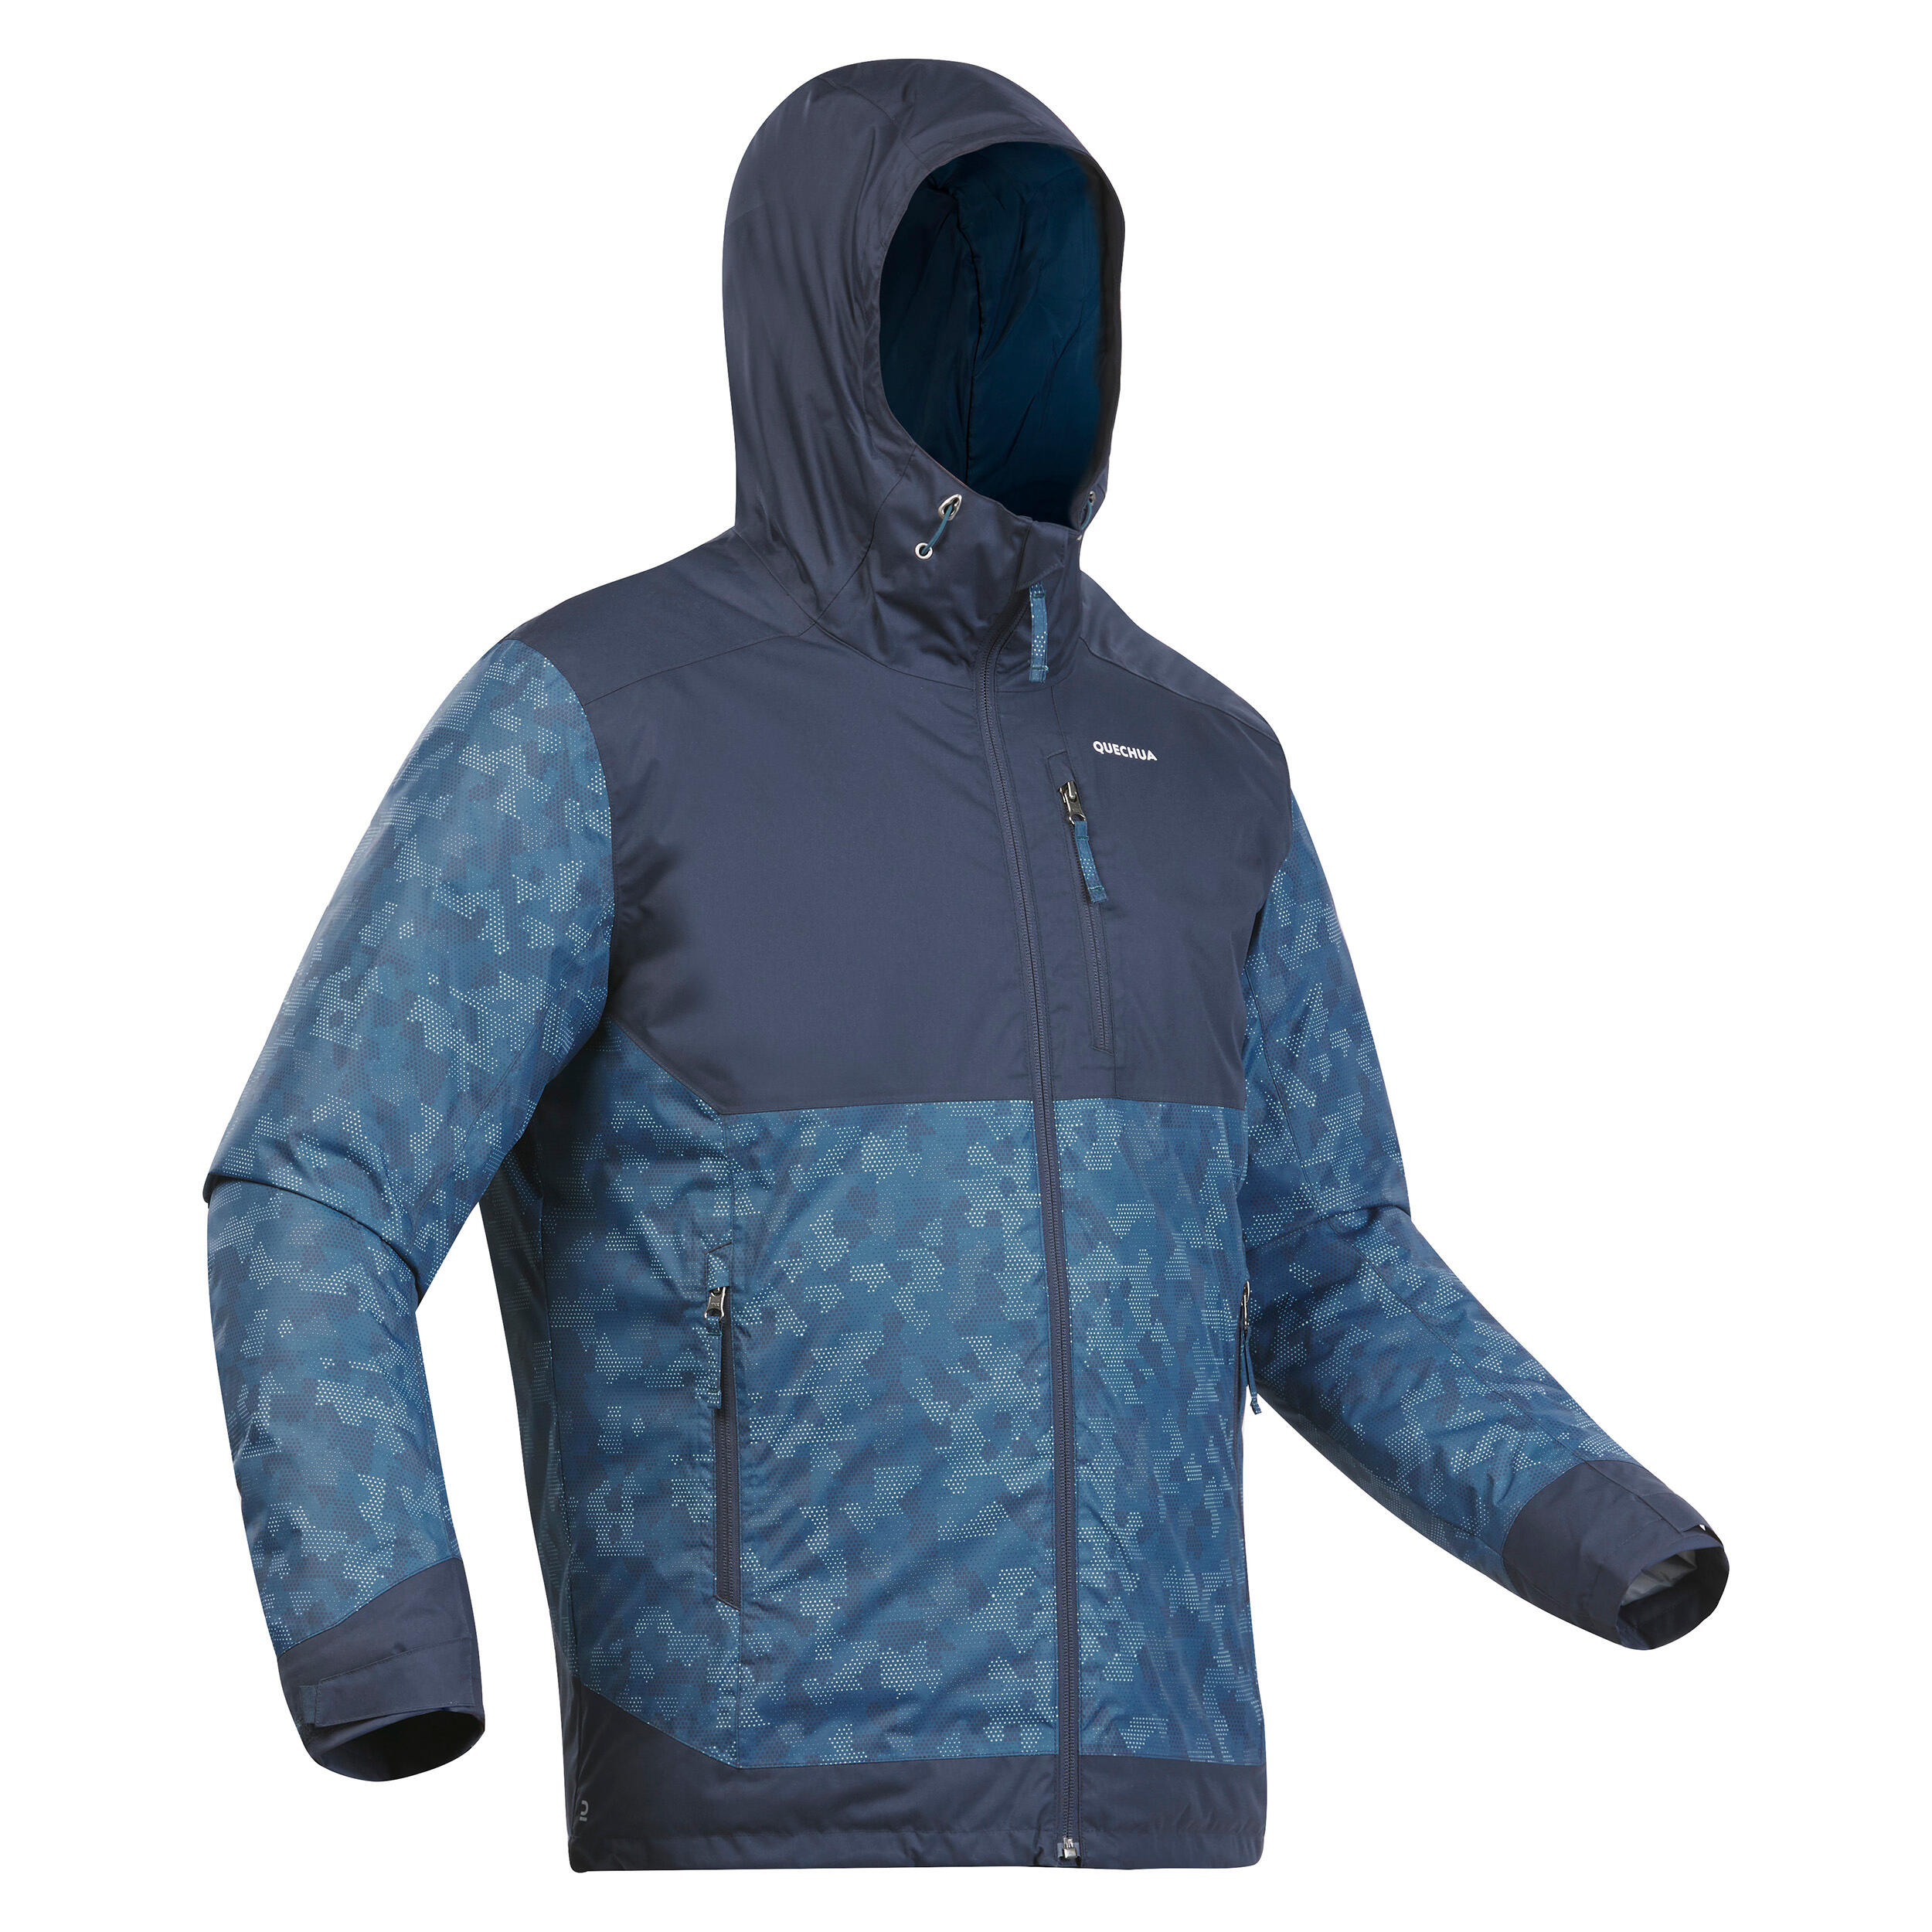 Men’s hiking waterproof winter jacket - SH500 -10°C 5/15